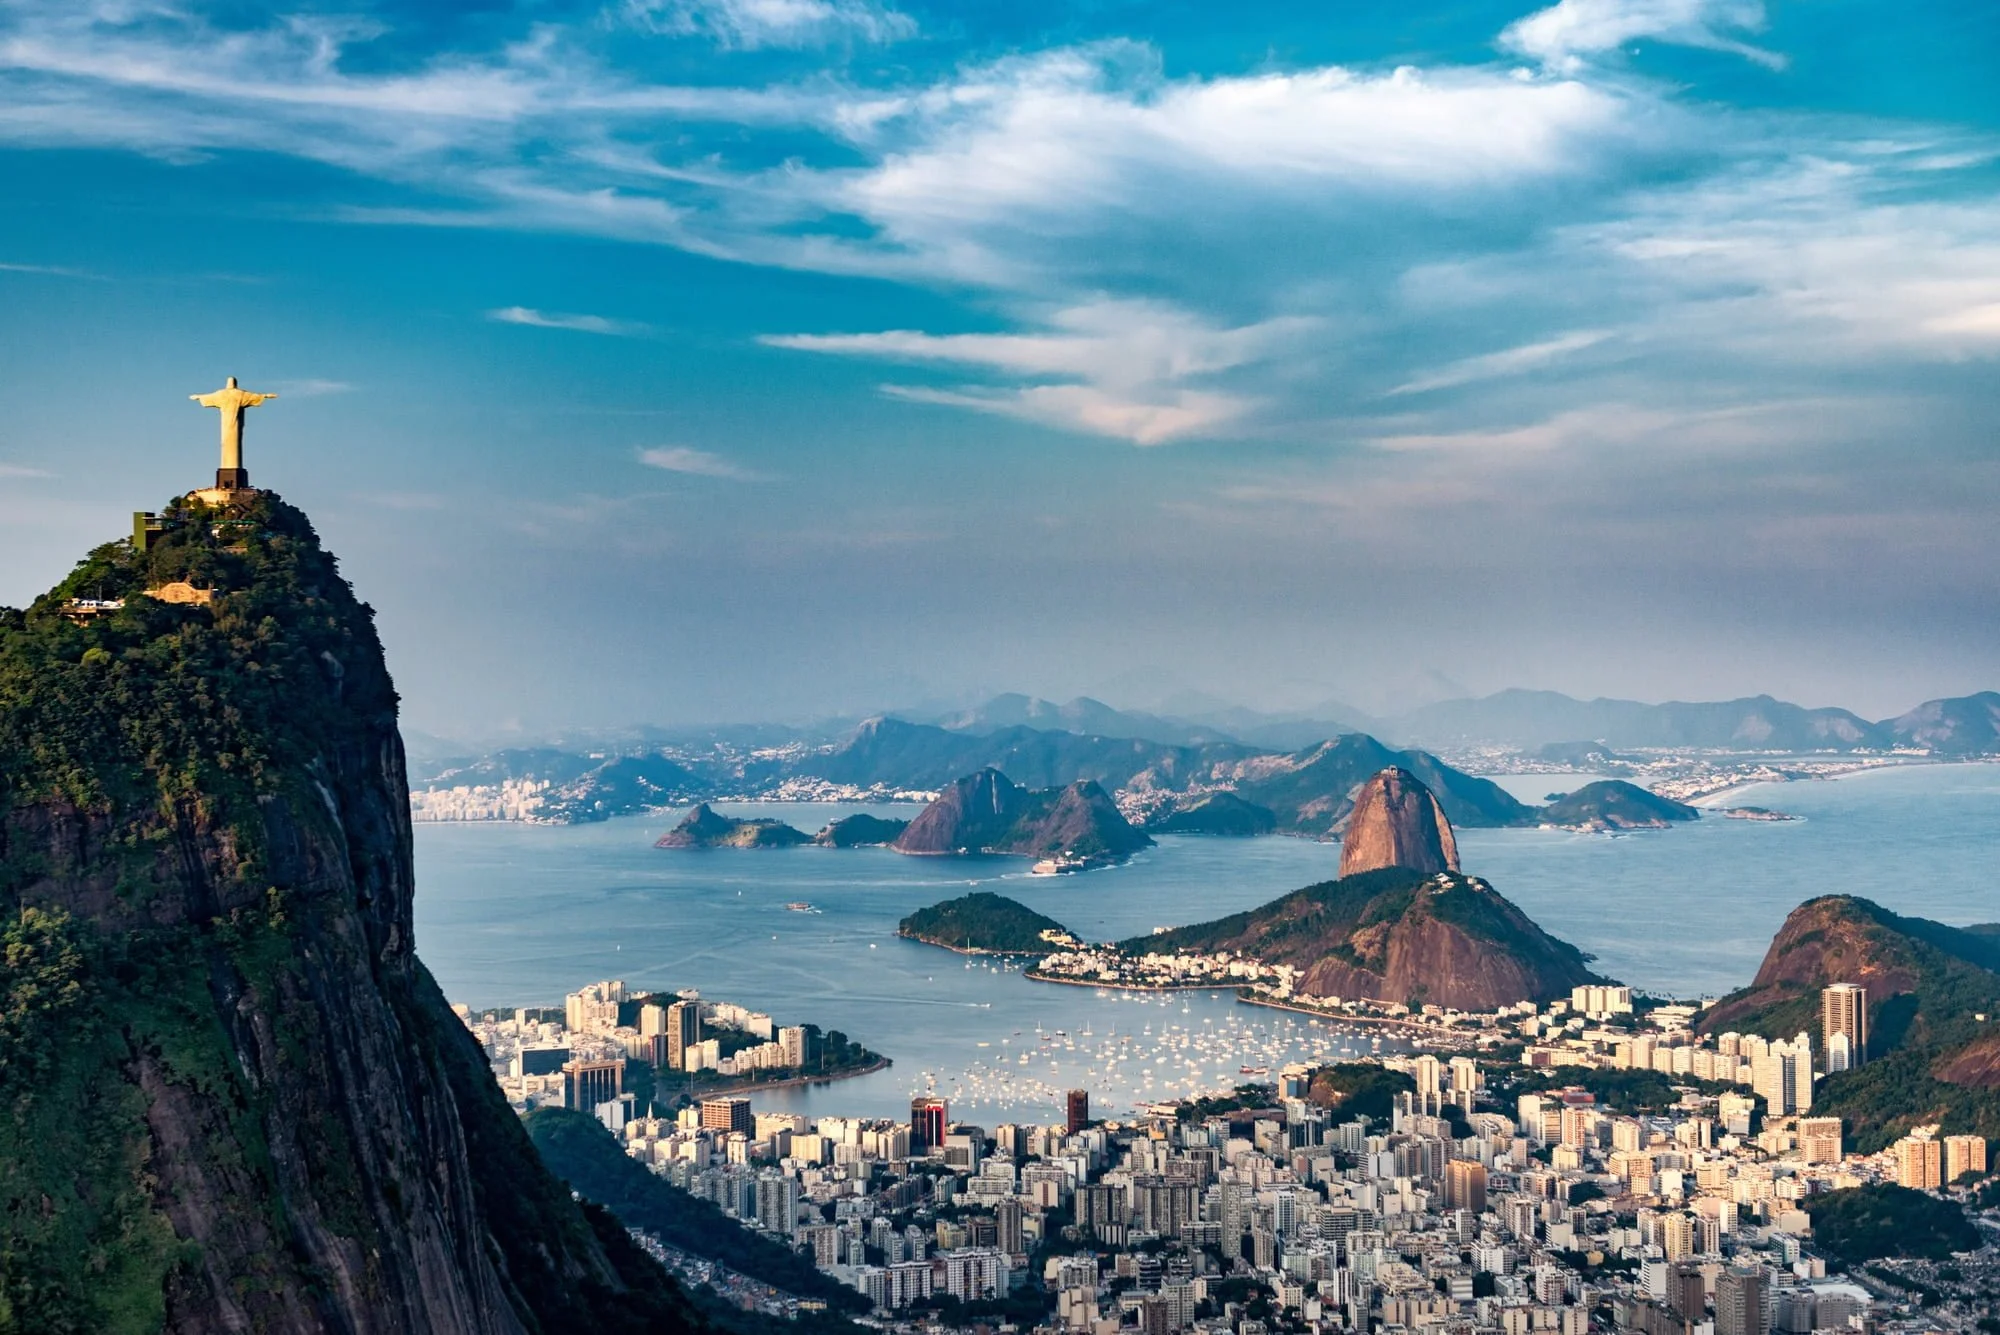  Traveltalk er Danmarks store rejseportal. Rio De Janeiro. Corcovado mountain med Christ the Redeemer, Botafogo and Centro, Sugarloaf mountain.